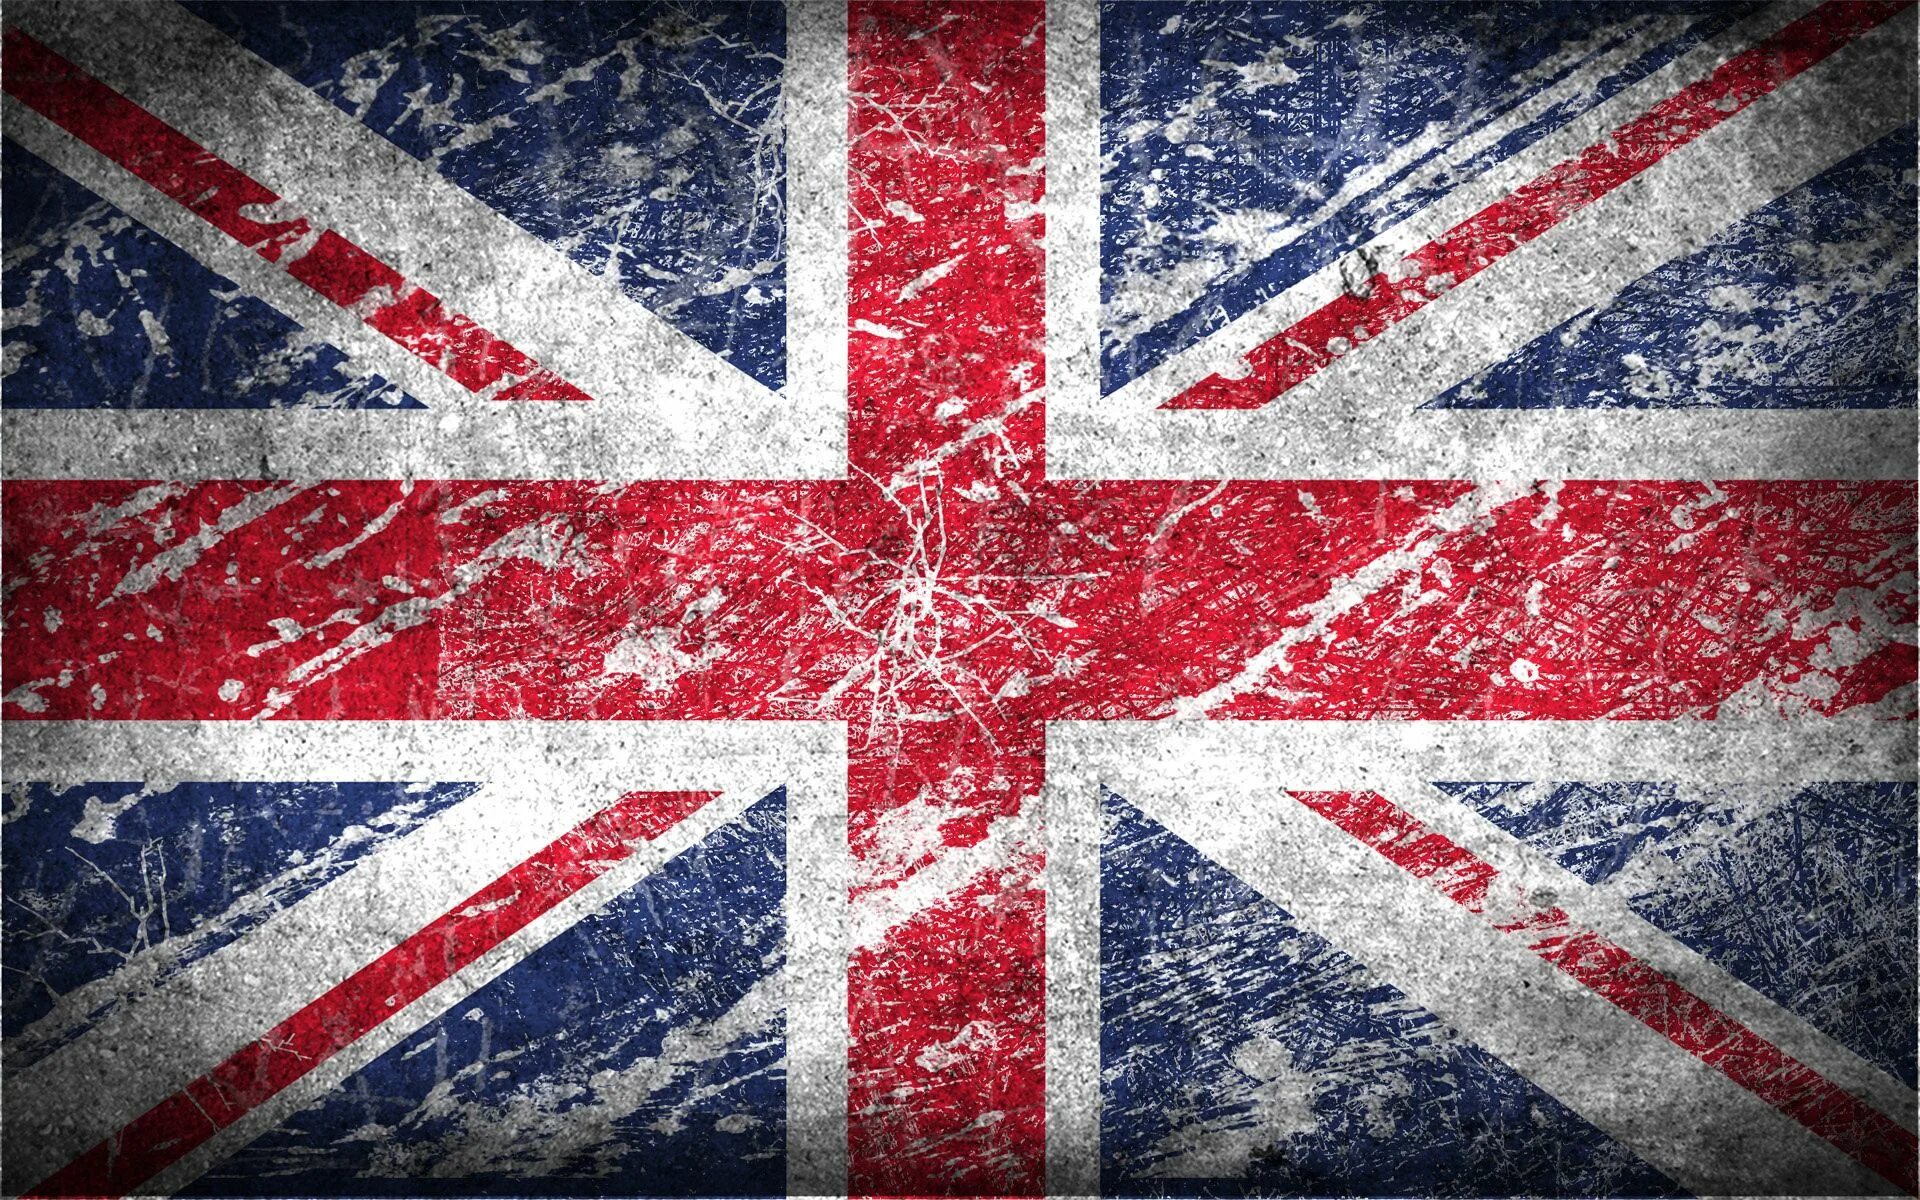 Uk candece. Флаг Англии и Великобритании. Буюк Британия флаг. Юнион Джек флаг. Флаг Великобритании Union Jack.